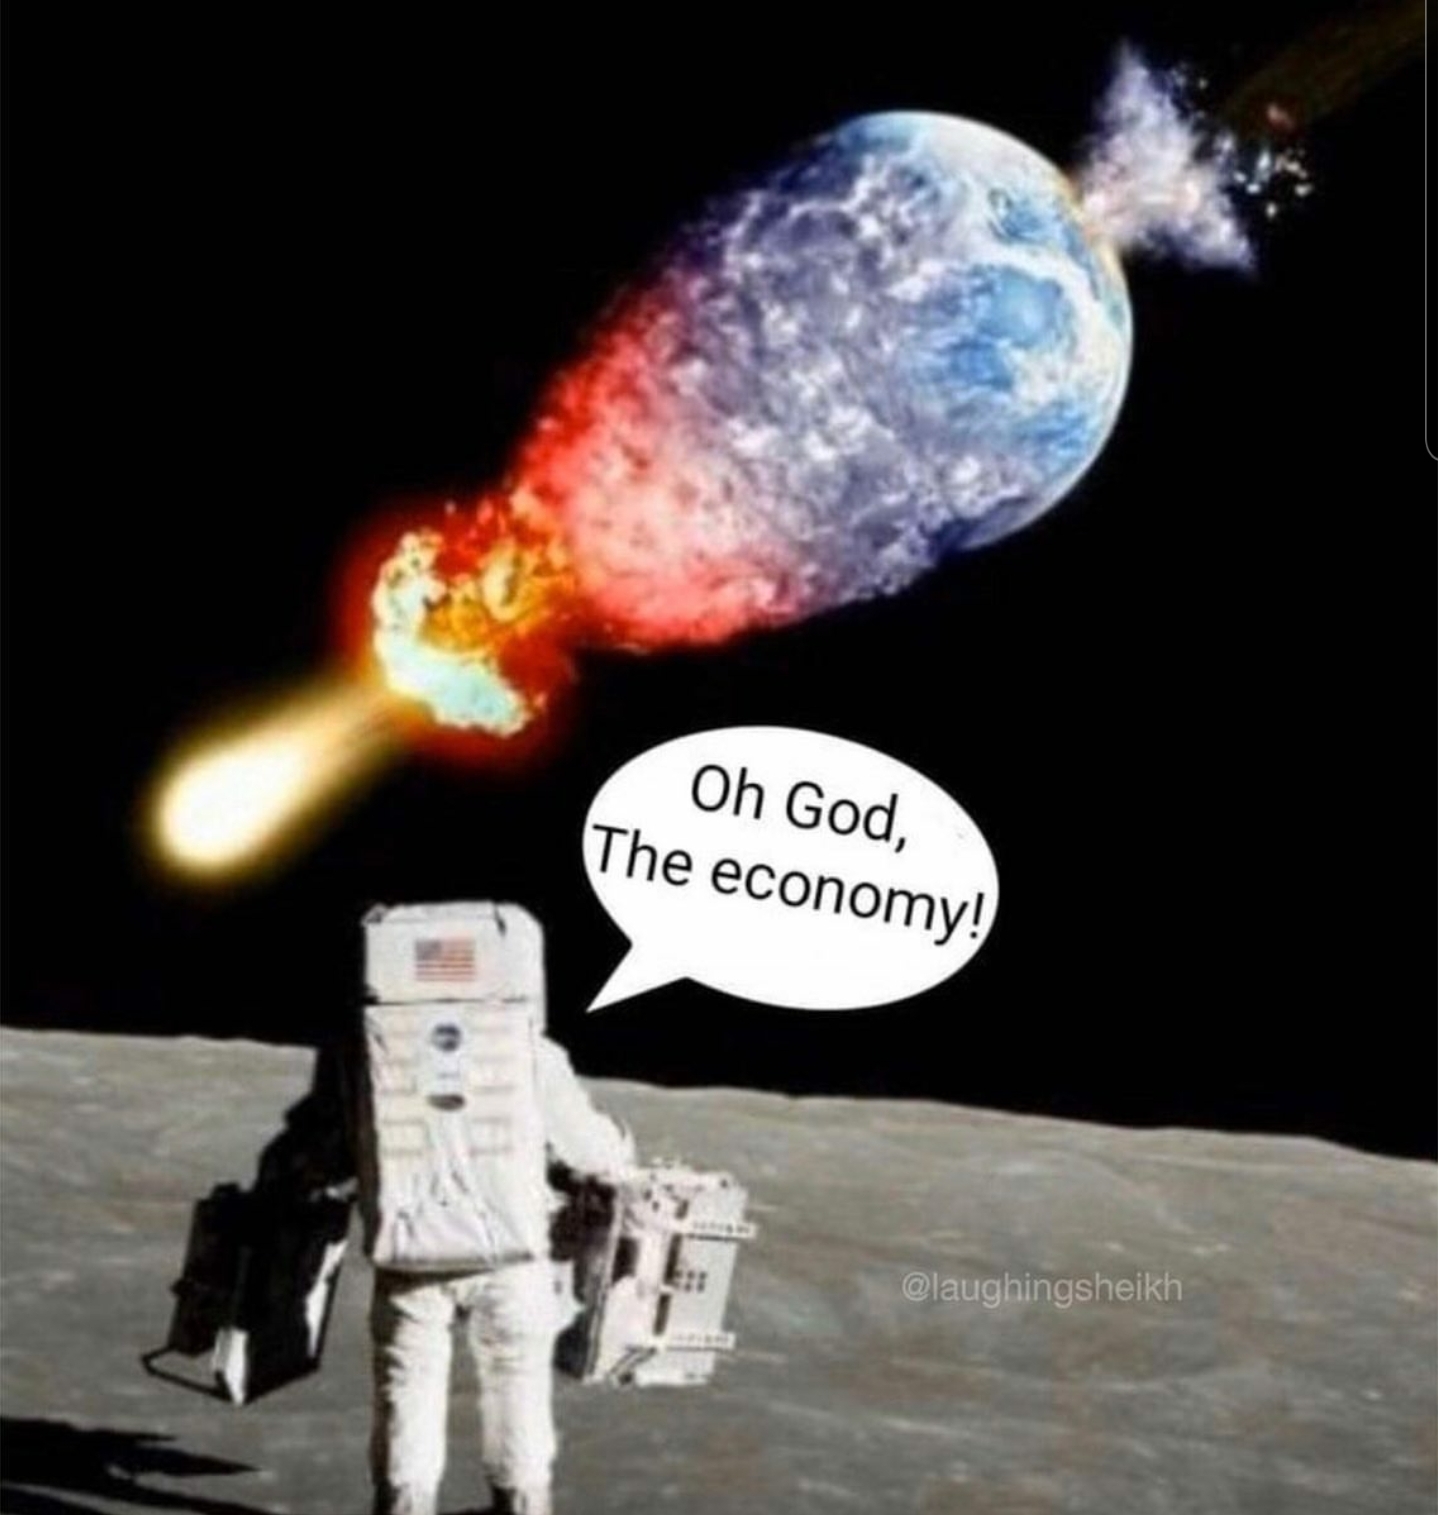 meme designated driver - Oh God, The economy! laughingsheikh